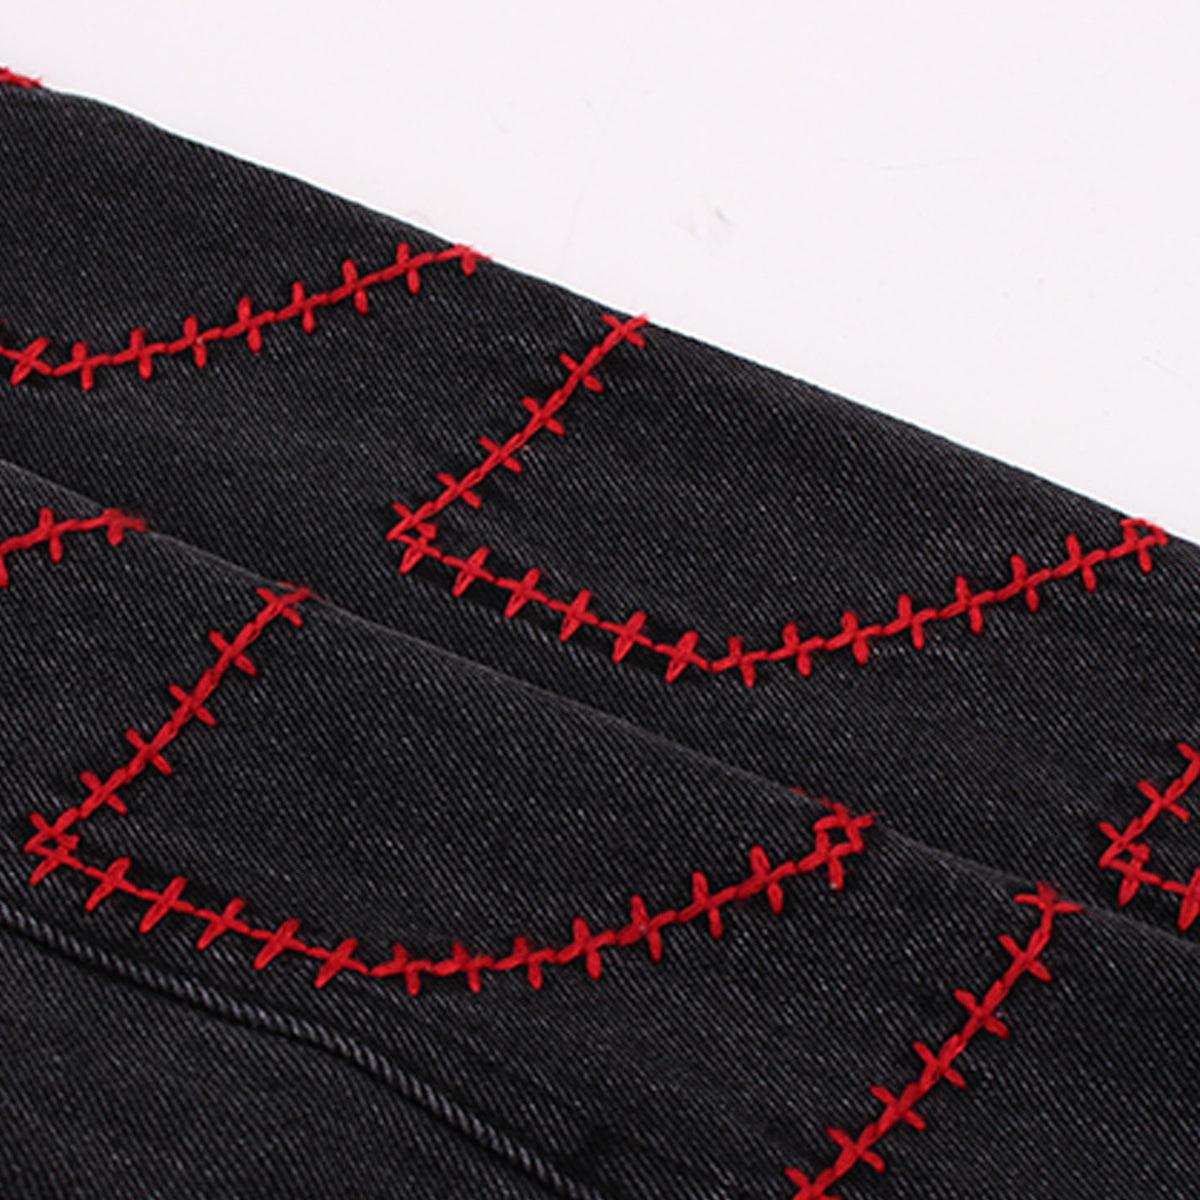 Cross Stitch Black Grunge Denim Jacket - Aesthetic Clothes Shop